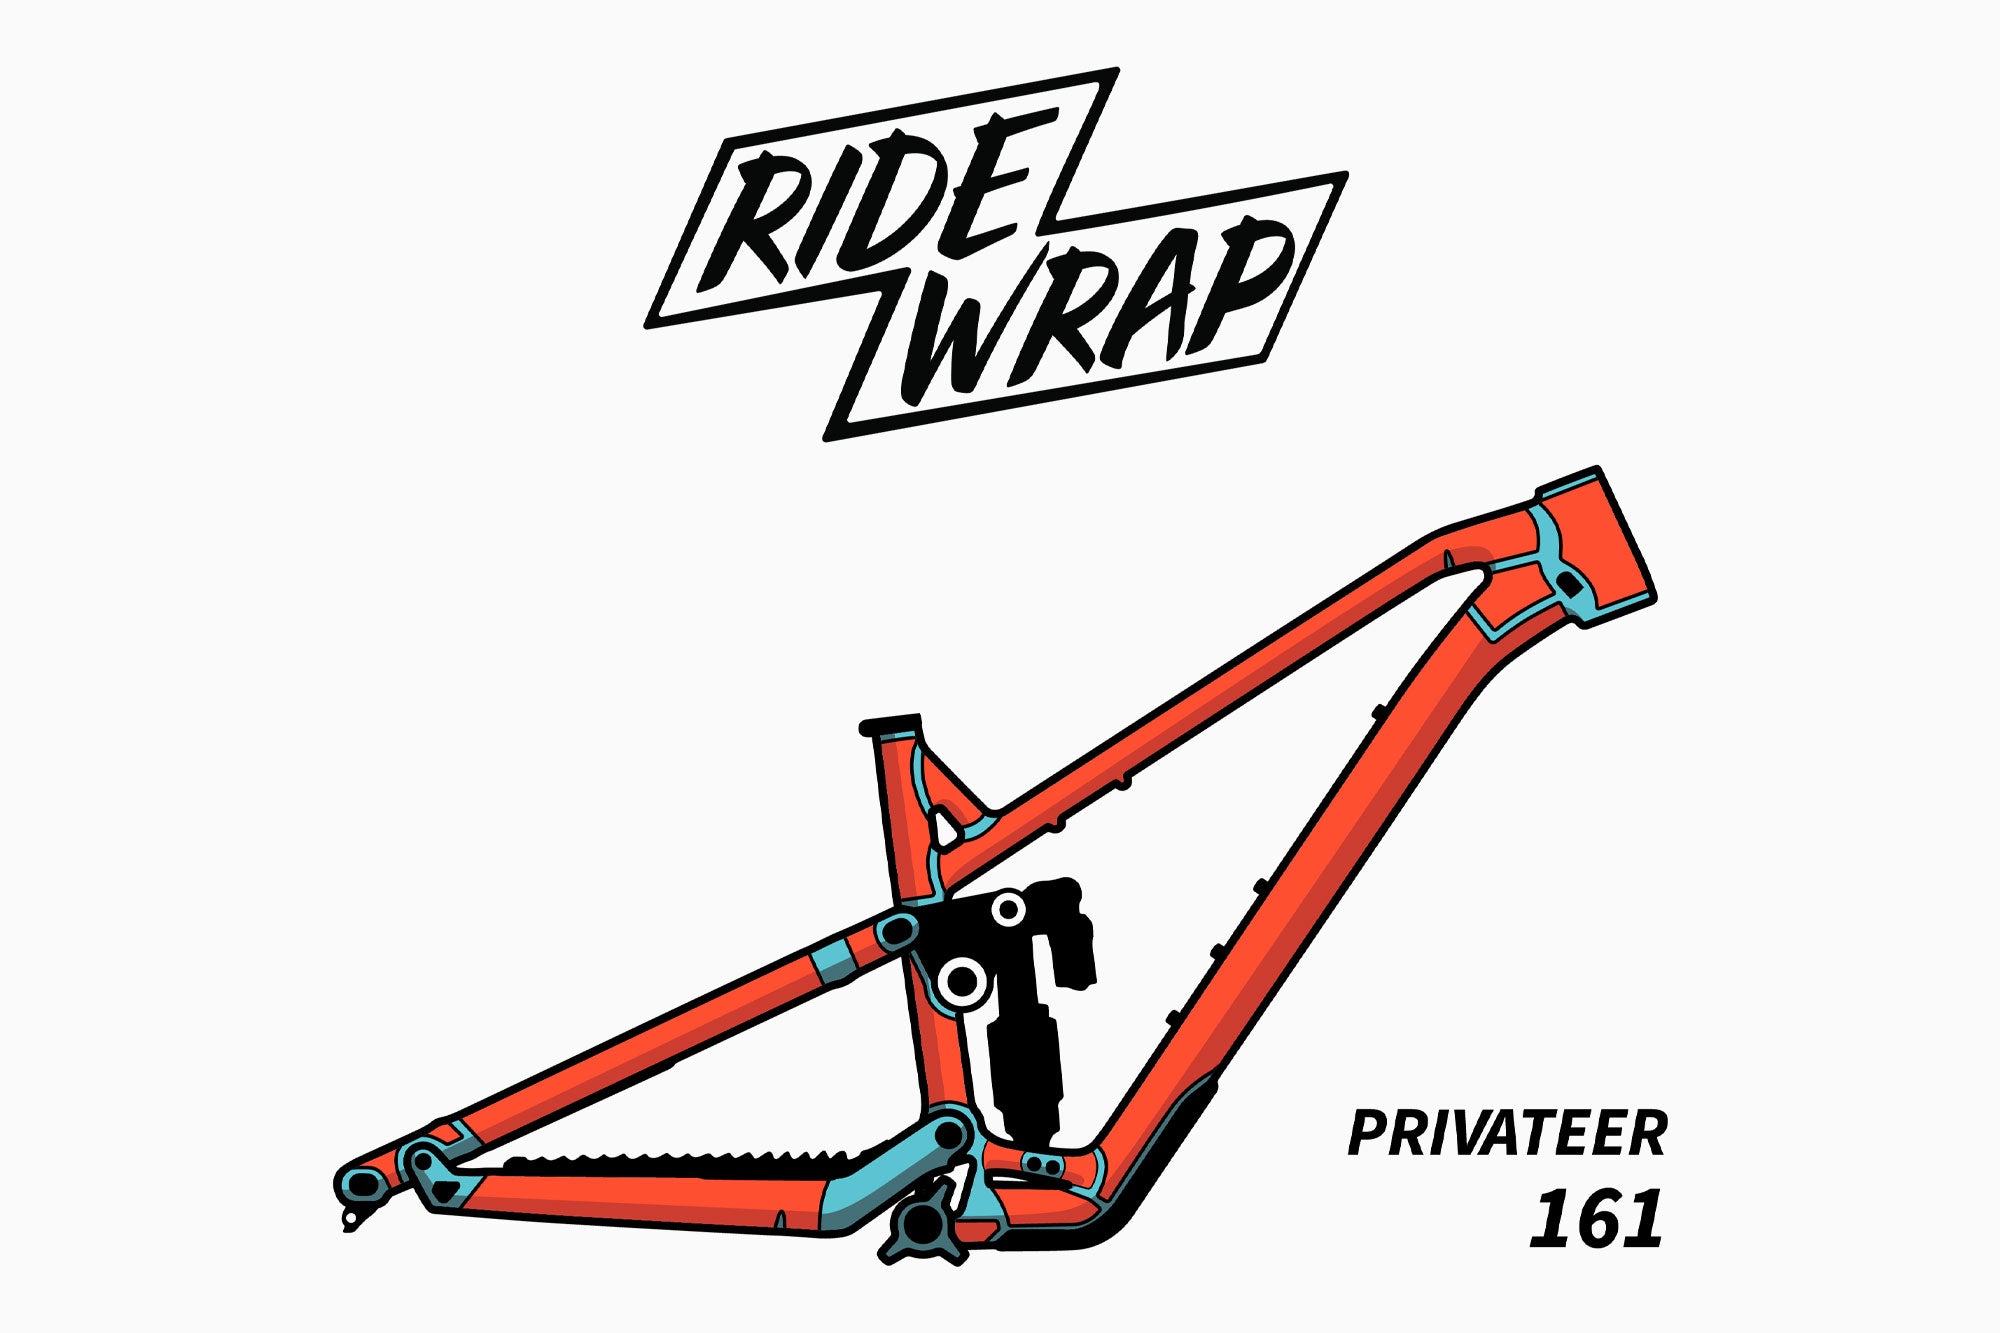 RideWrap for Privateer 161 Gen 2